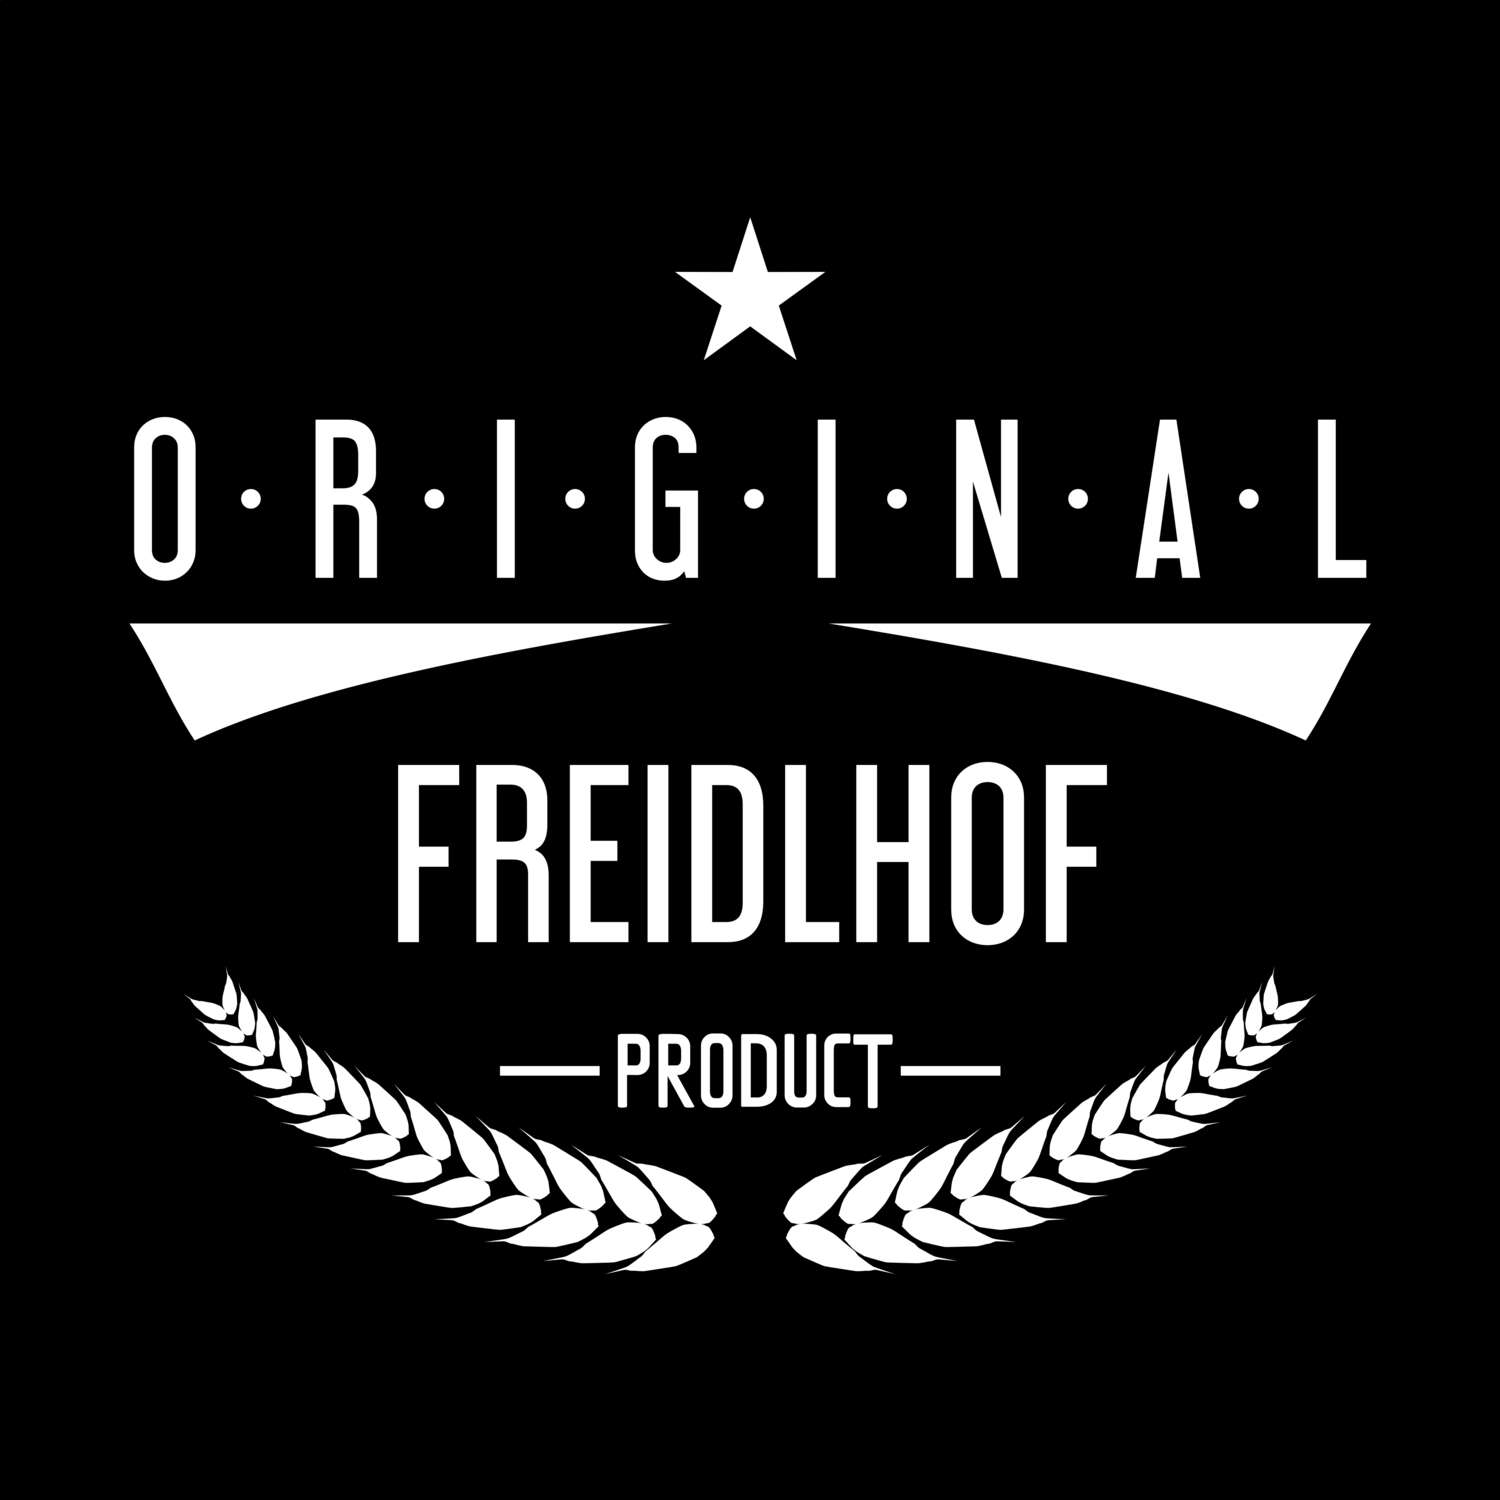 Freidlhof T-Shirt »Original Product«